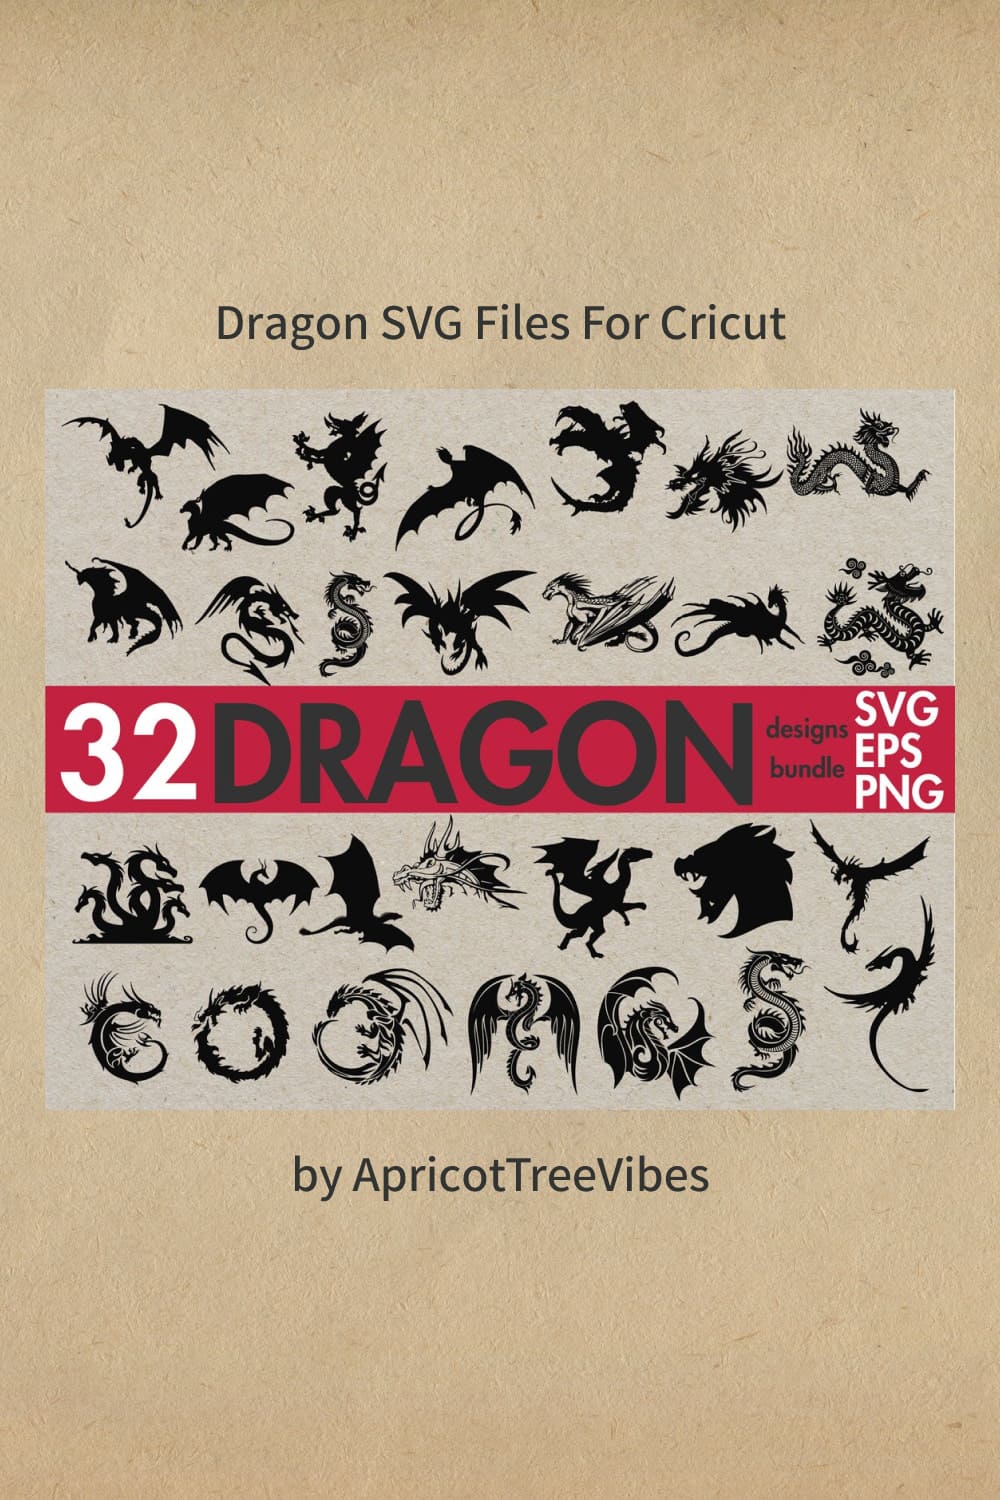 dragon svg files for cricut pinterest image.